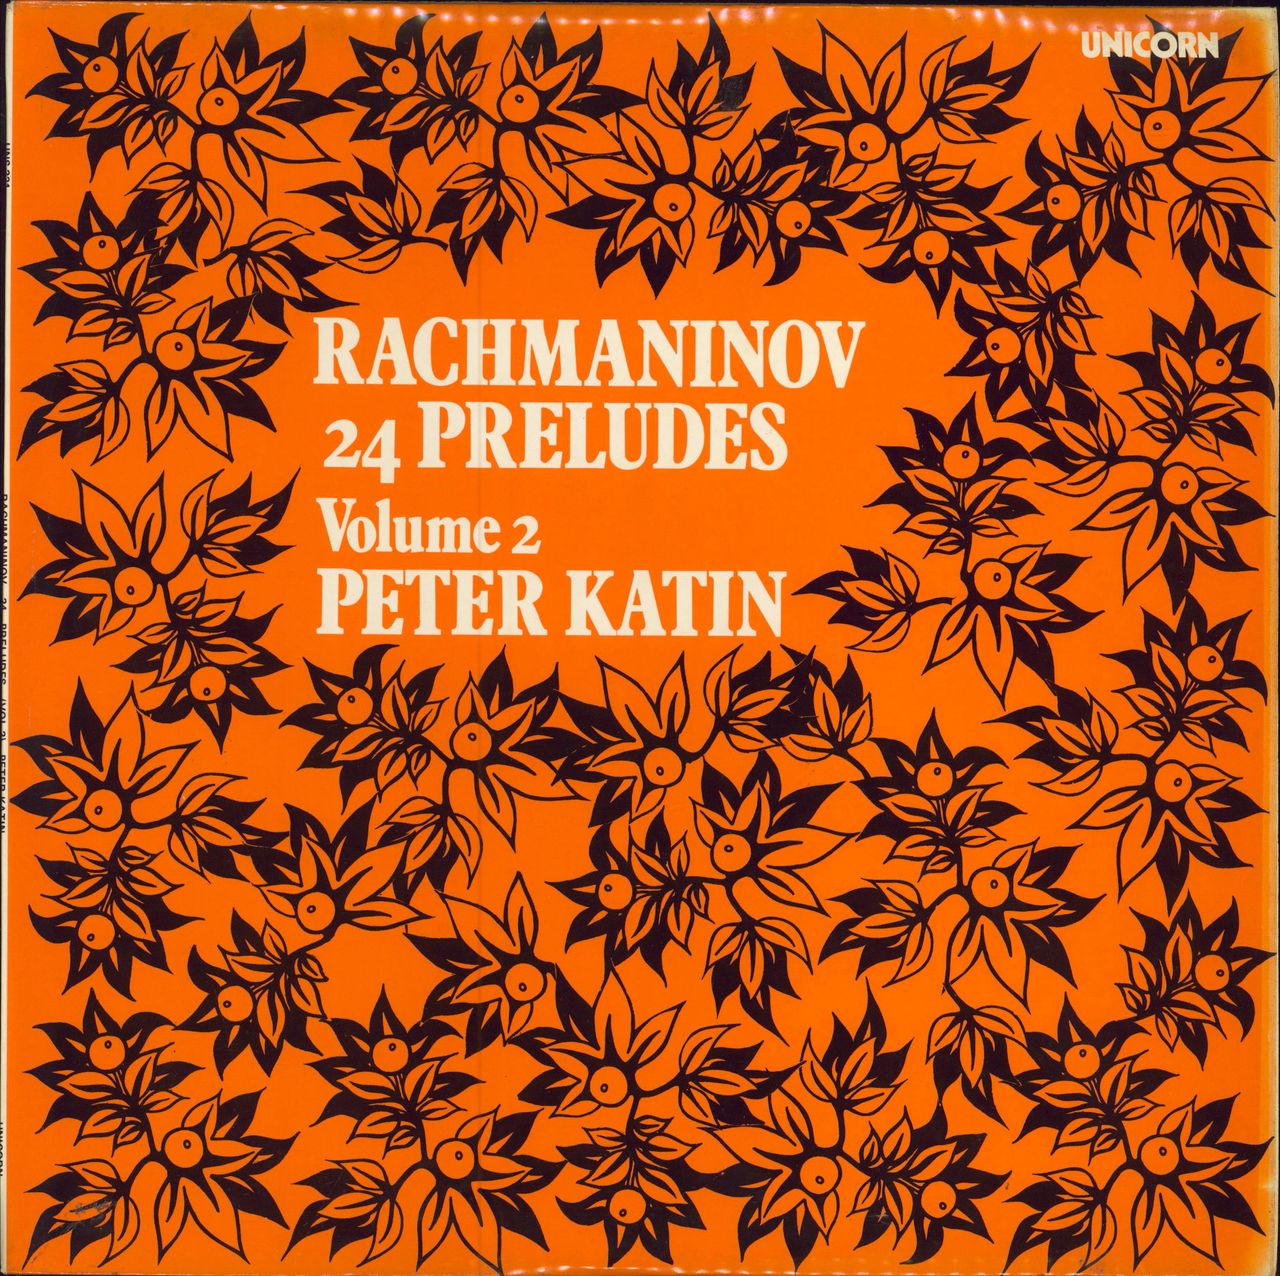 Peter Katin Rachmaninov: 24 Preludes Volume 2 UK vinyl LP album (LP record) UNS231